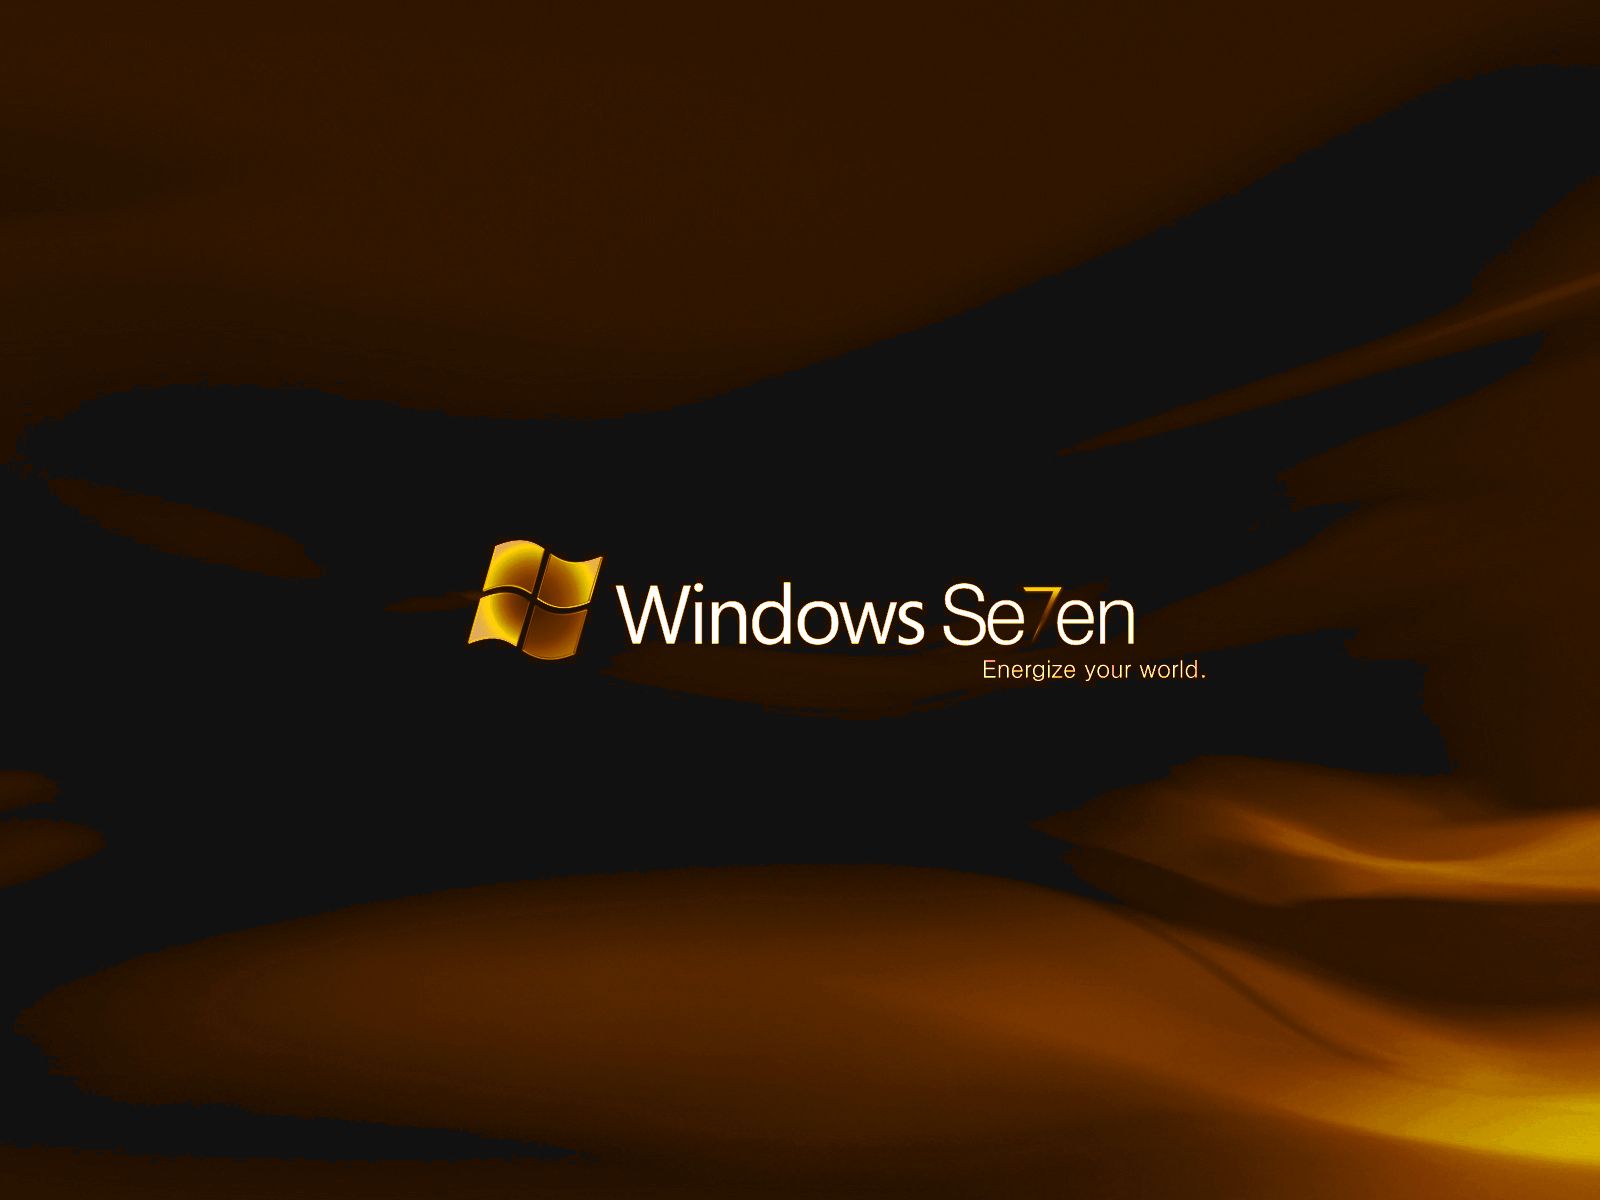 Windows 7 Wallpaper 2 by The-man-who-writes on DeviantArt